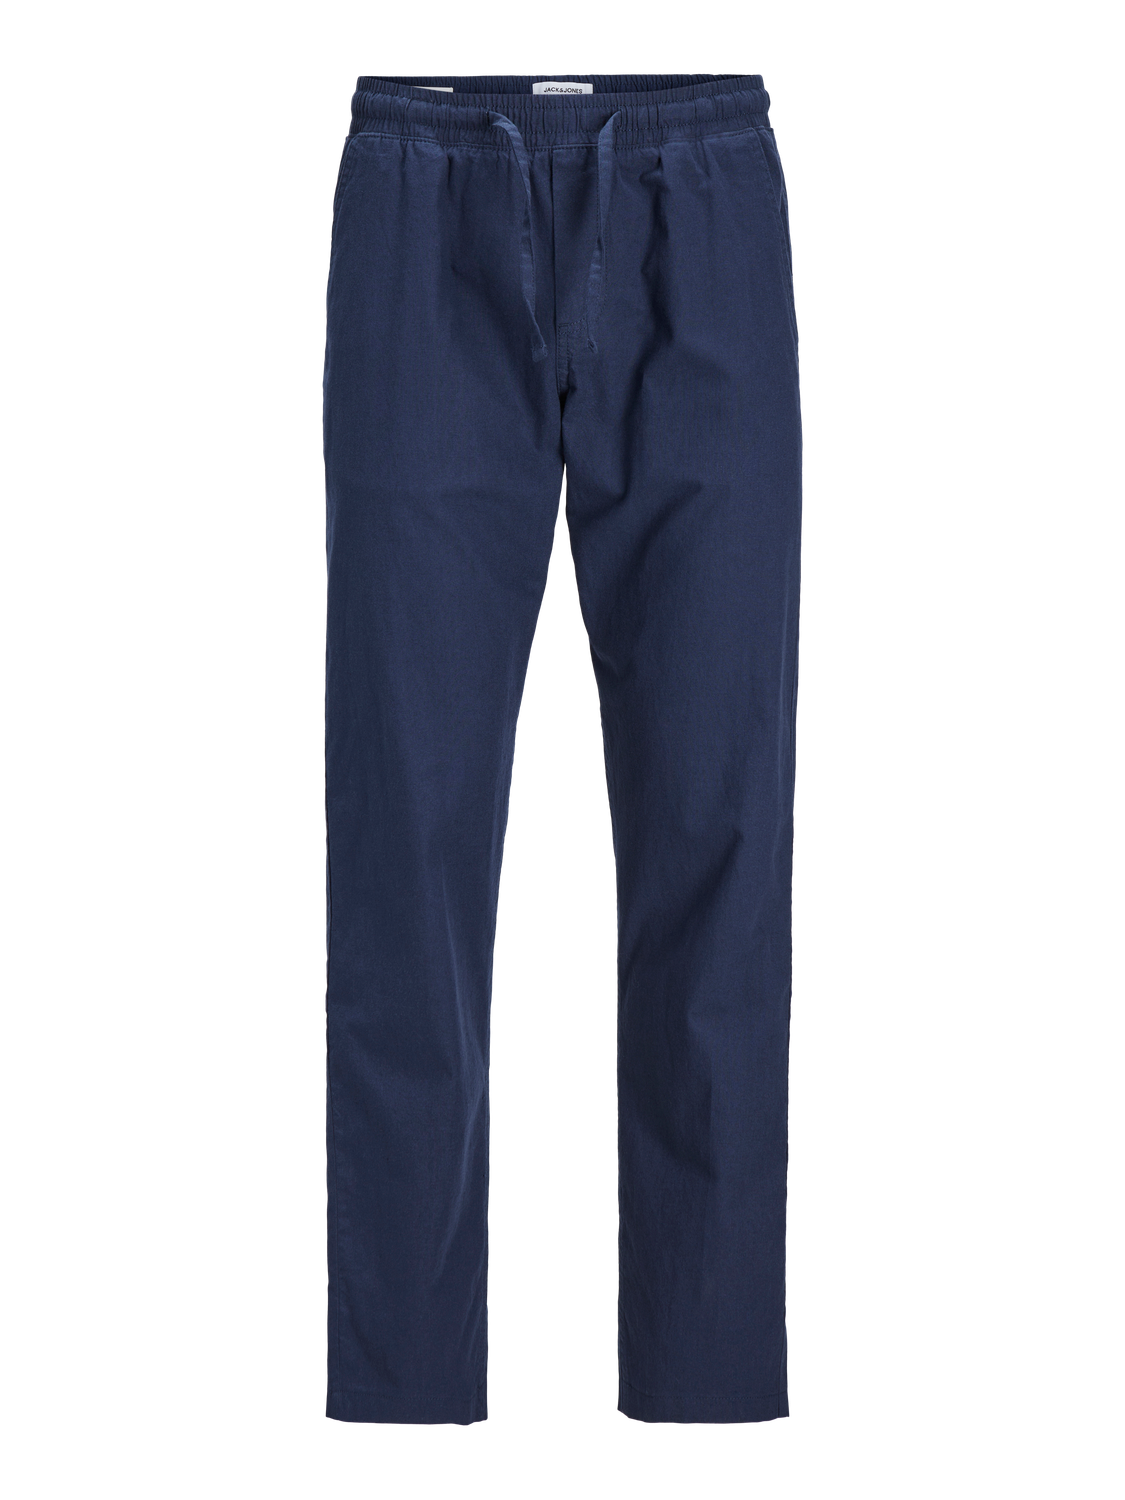 JPSTKANE Pants - Navy Blazer